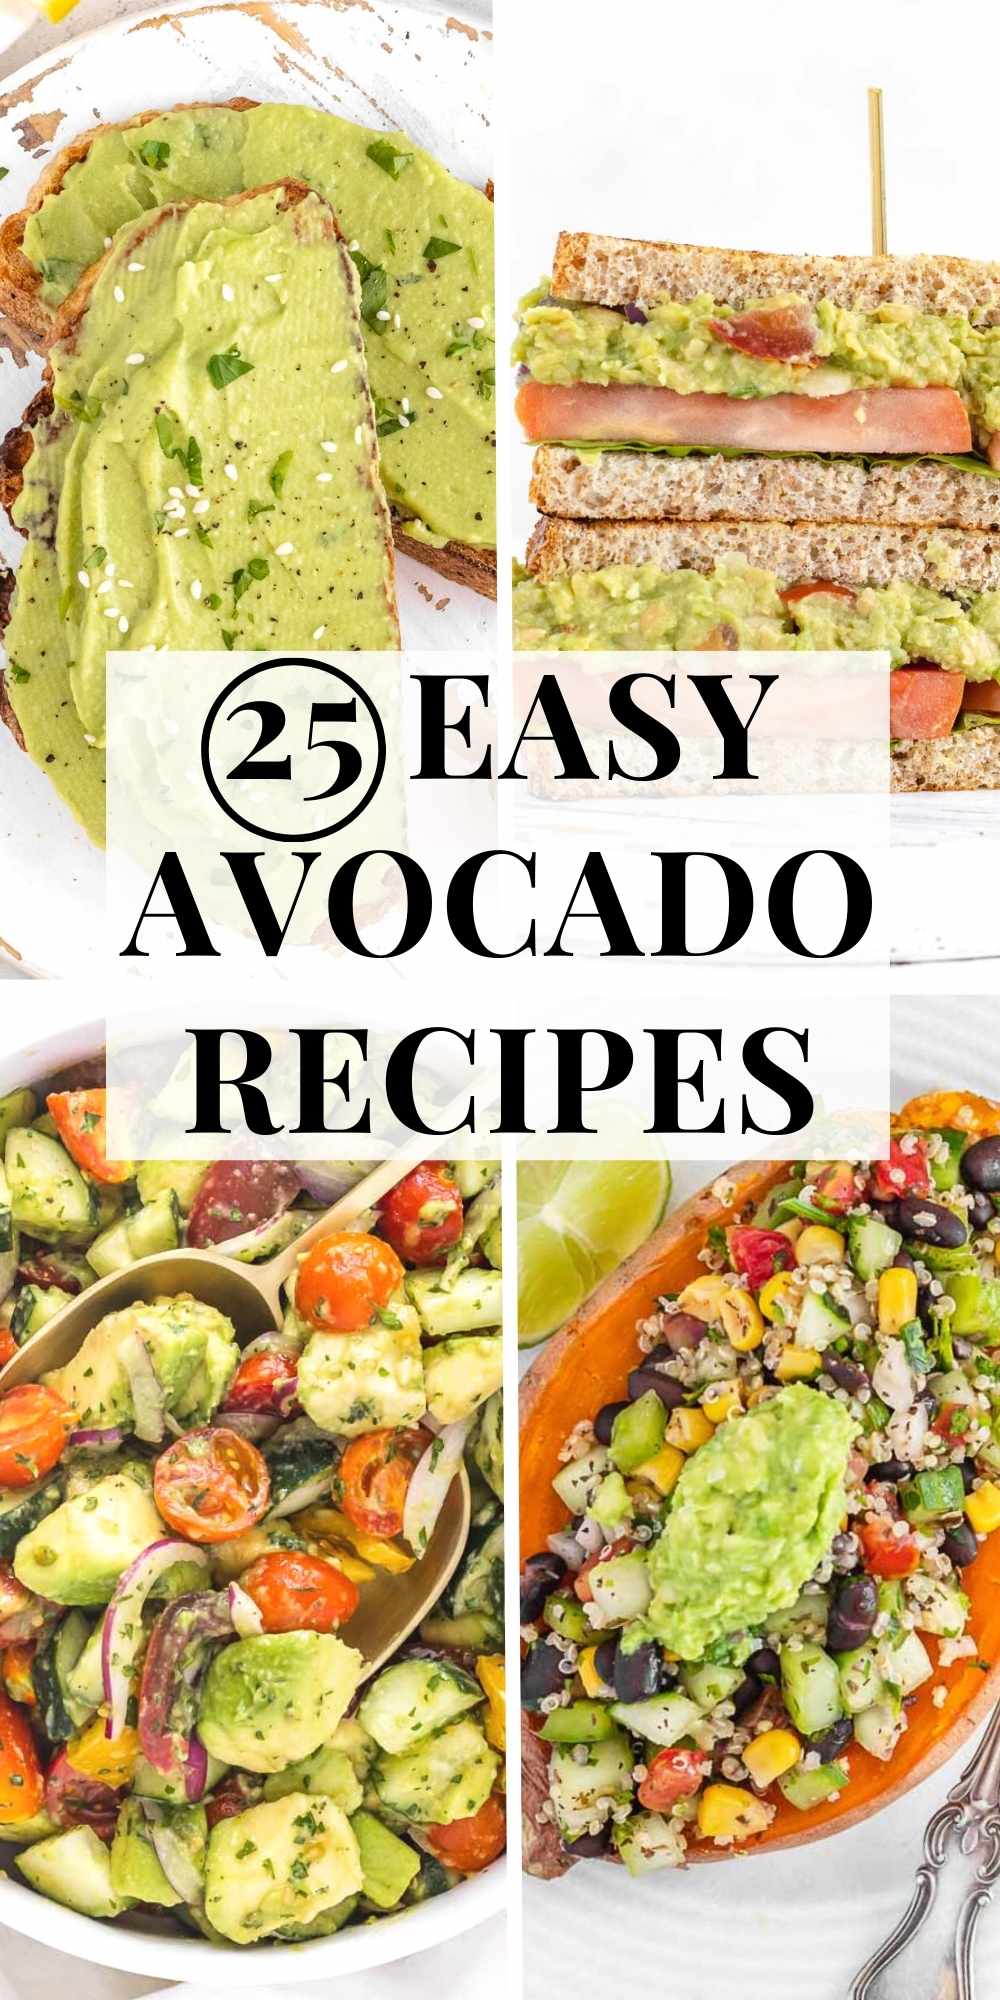 25 Avocado Recipes - The Plant Based School